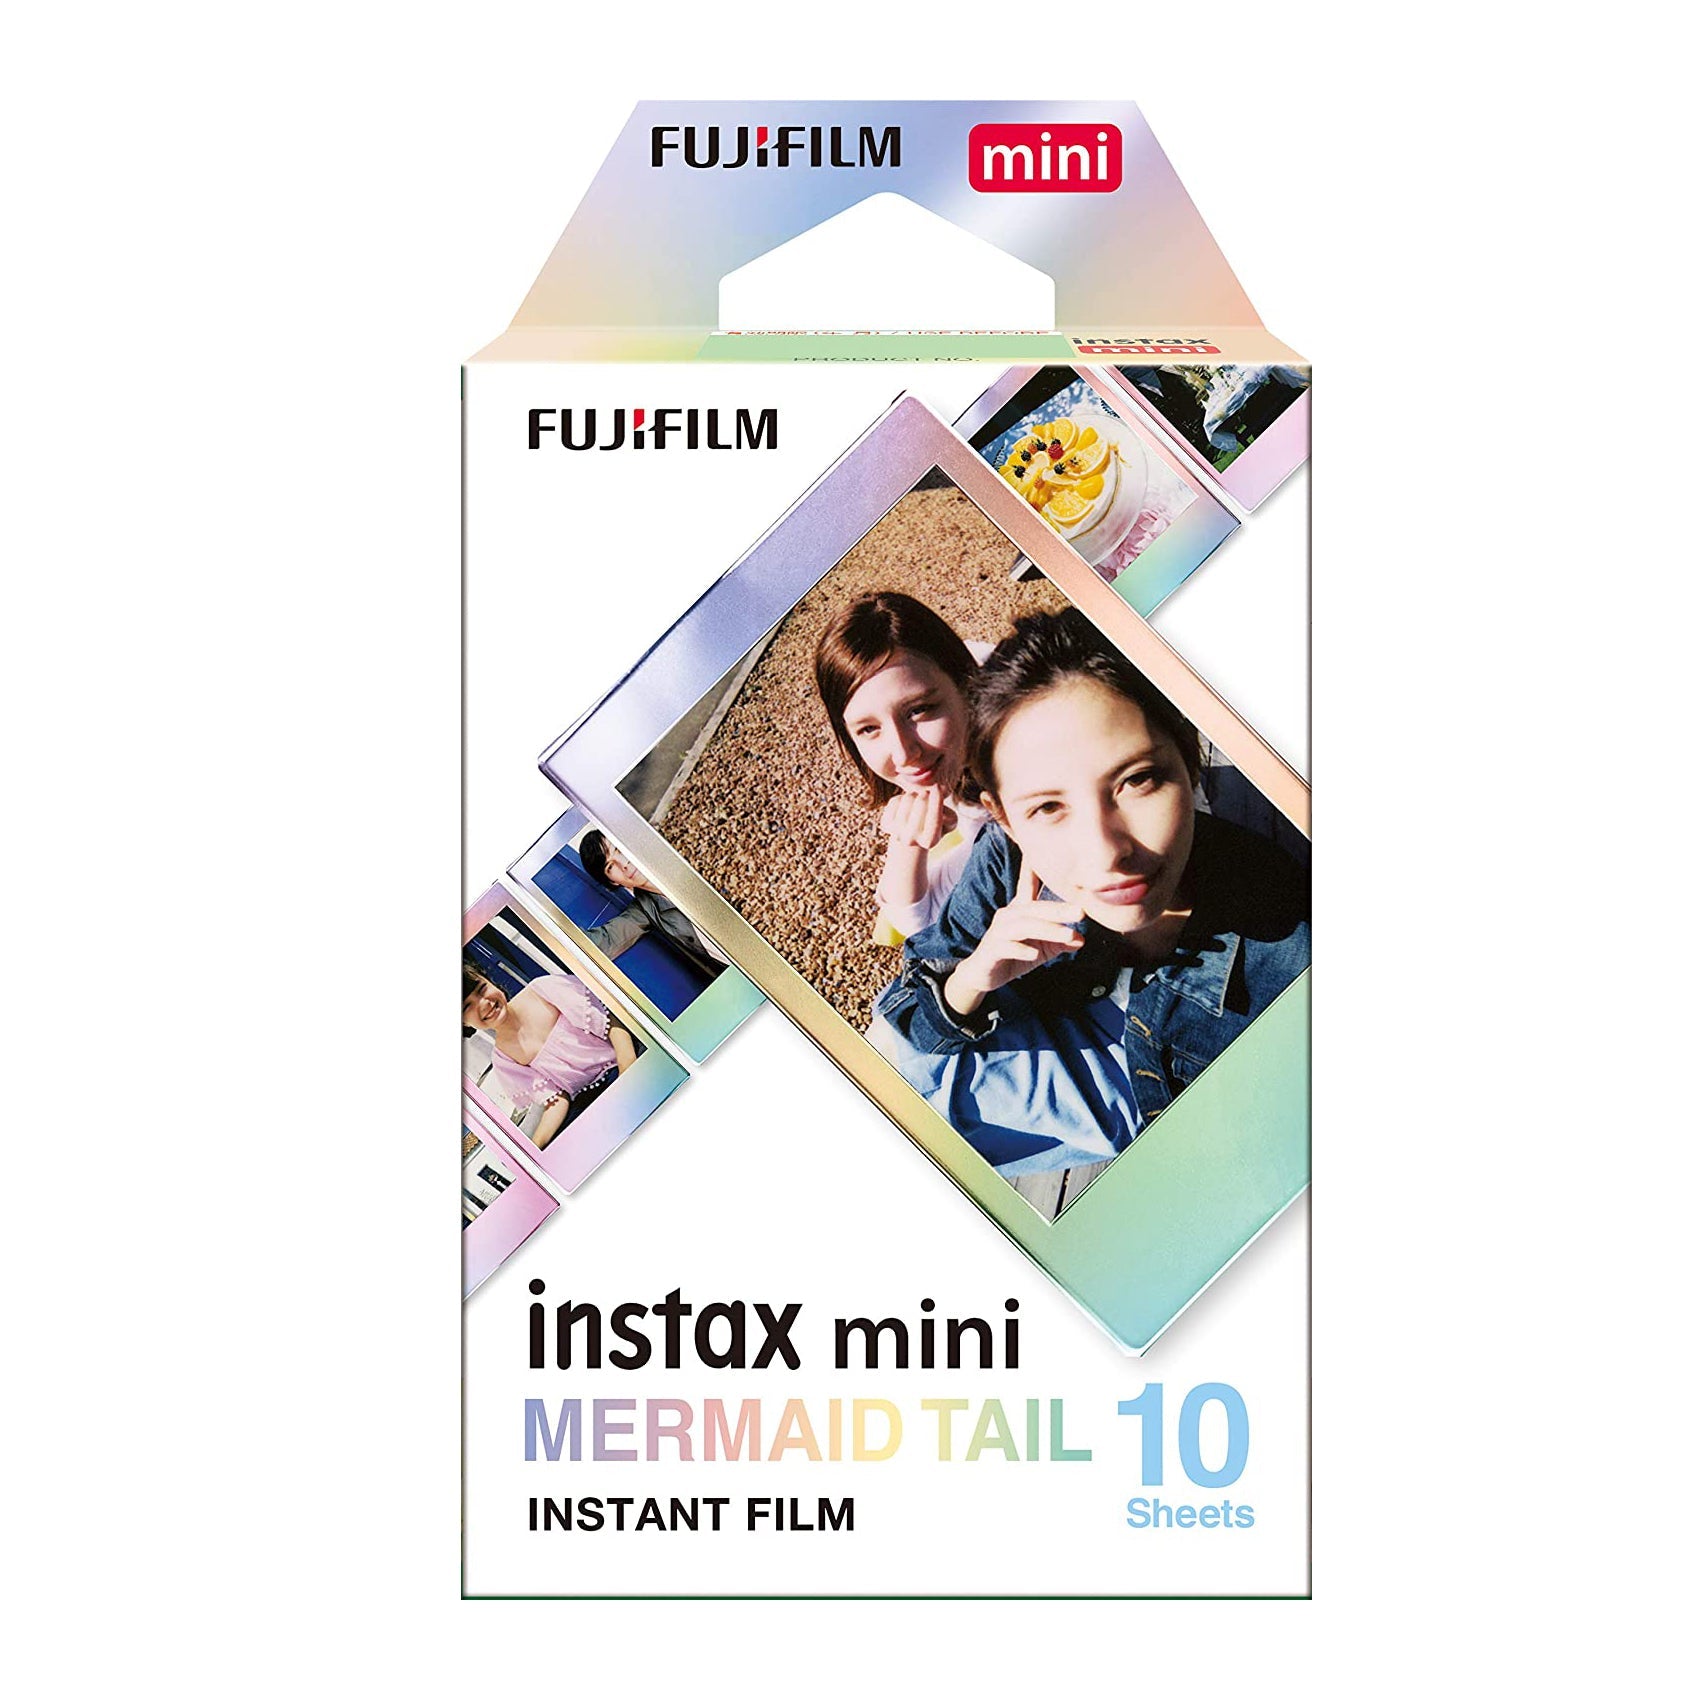 Fujifilm Instax Mini 10X1 mermaid tail Instant Film with 96-sheet Album for mini film (Smoky white)